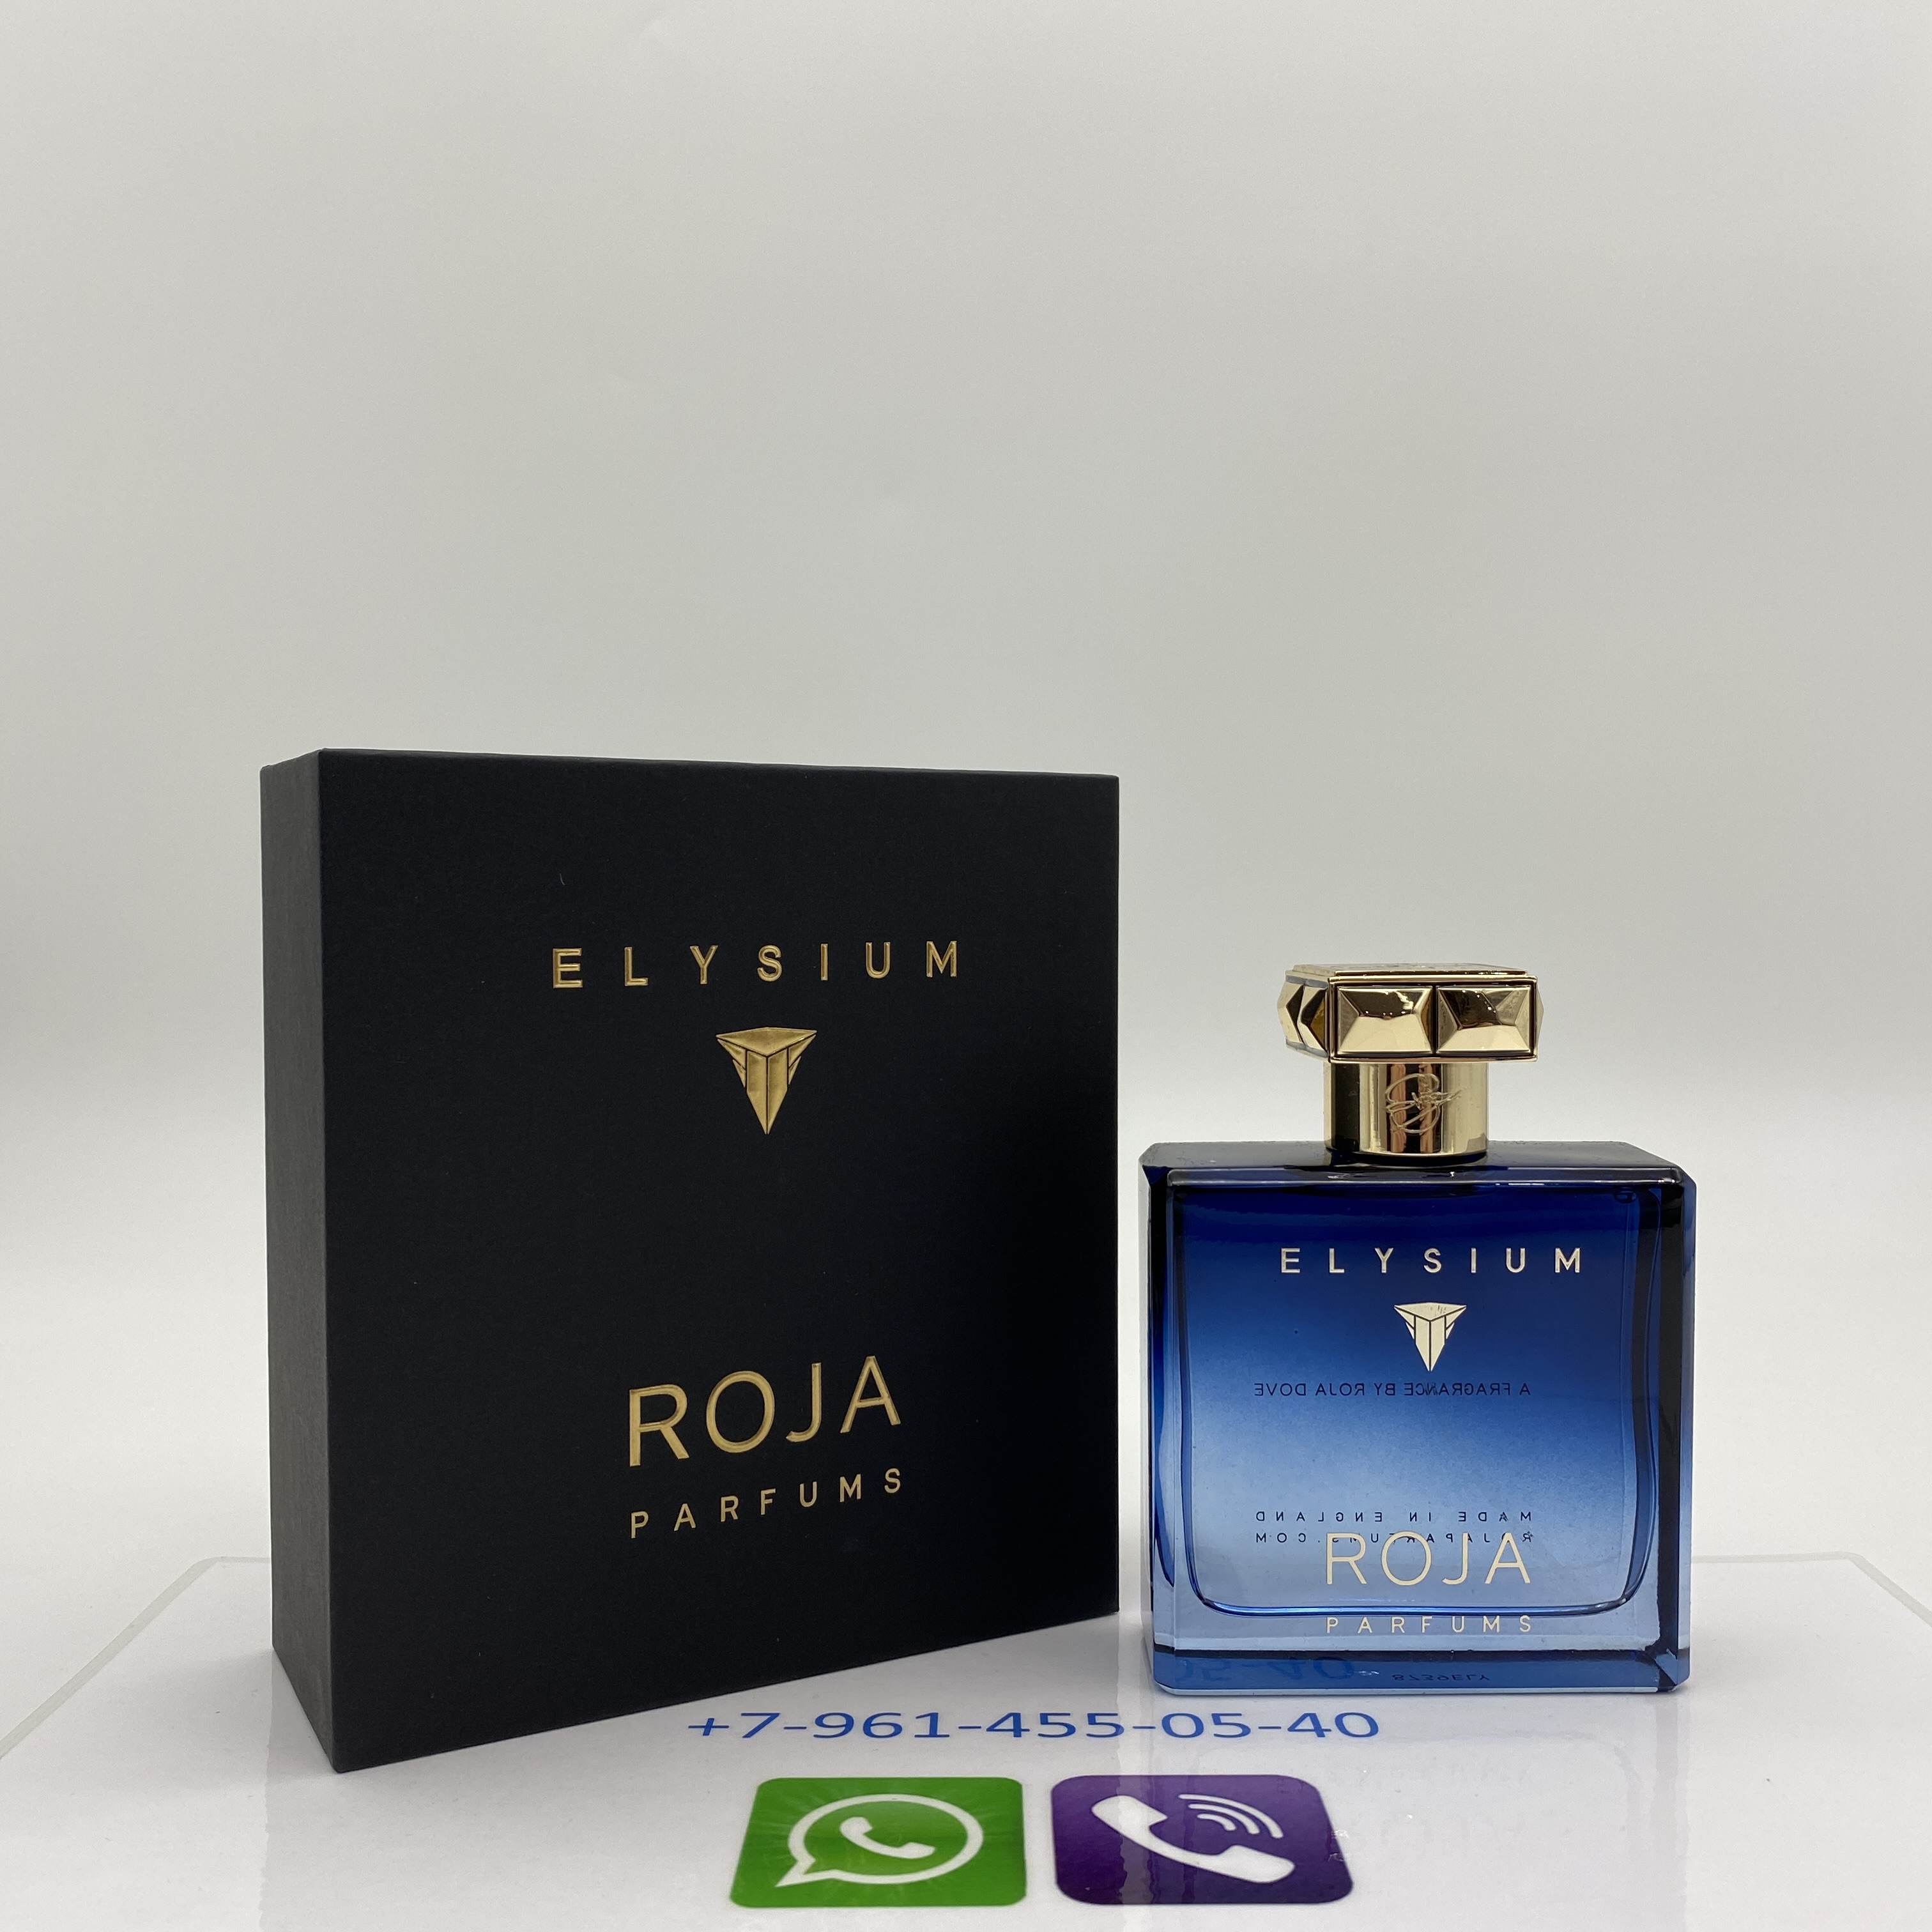 Roja Elysium Parfum 48 ml. Elysium Parfum Cologne. Roja Elysium мужской. Elysium Roja Parfums мужской.